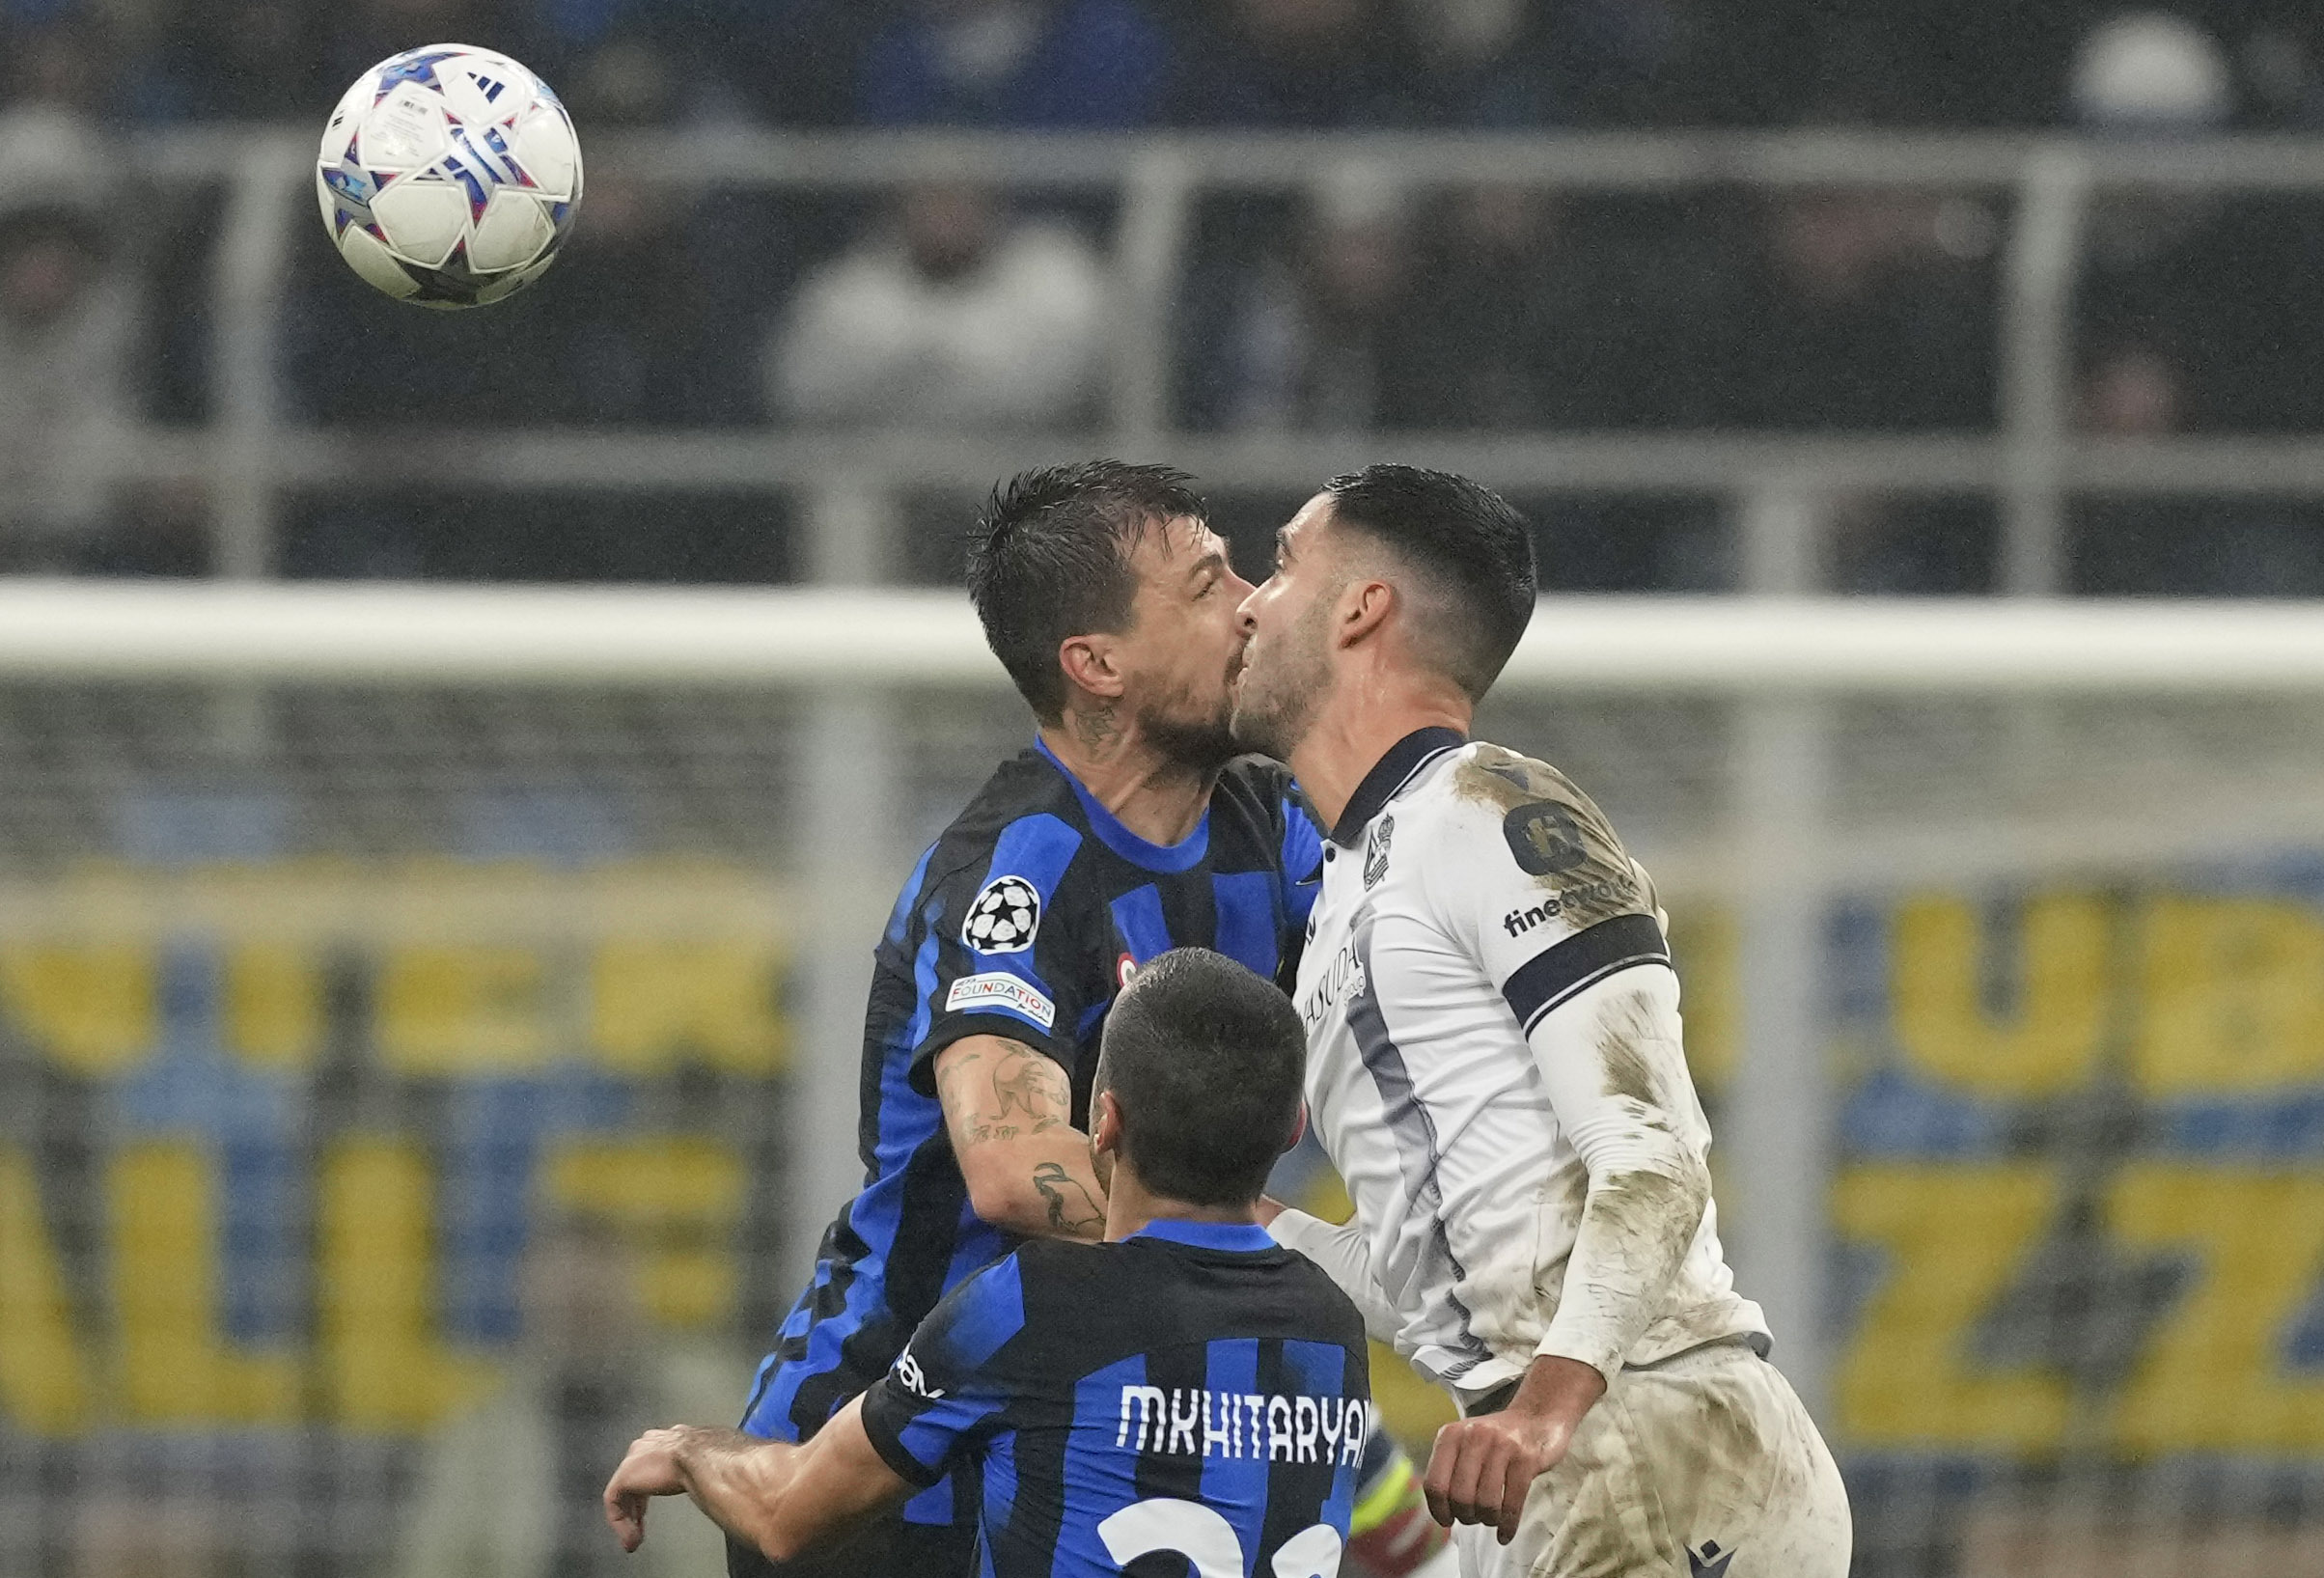 Inter Milan’s Francesco Acerbi fights for the ball with Real Sociedad’s Igor Zubeldia